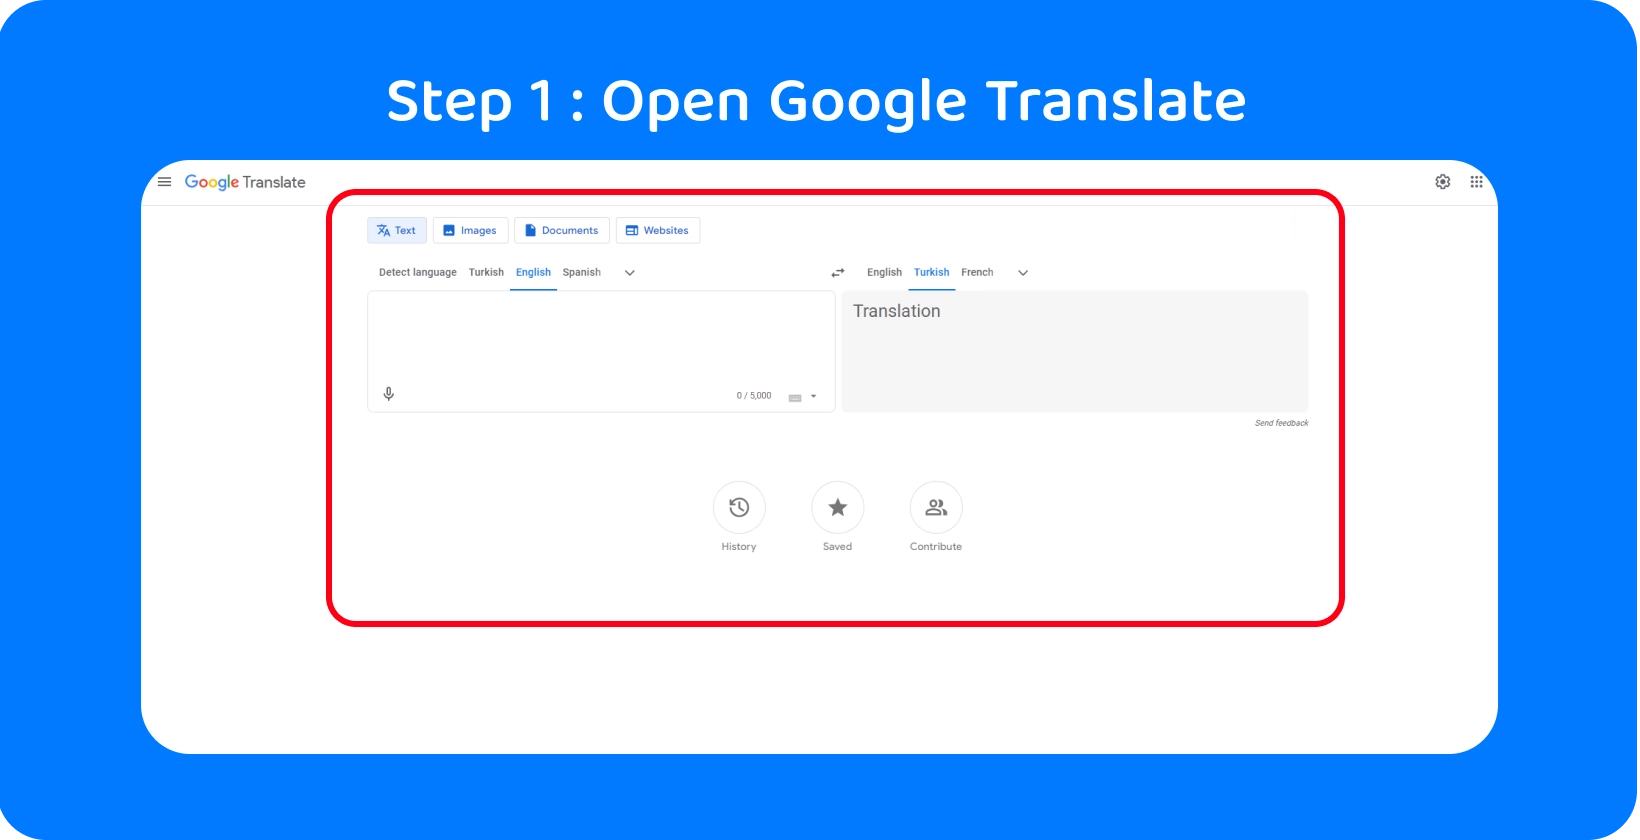 Google Translate界面已准备好将口语转换为文本，并说明了该过程中的第1步。